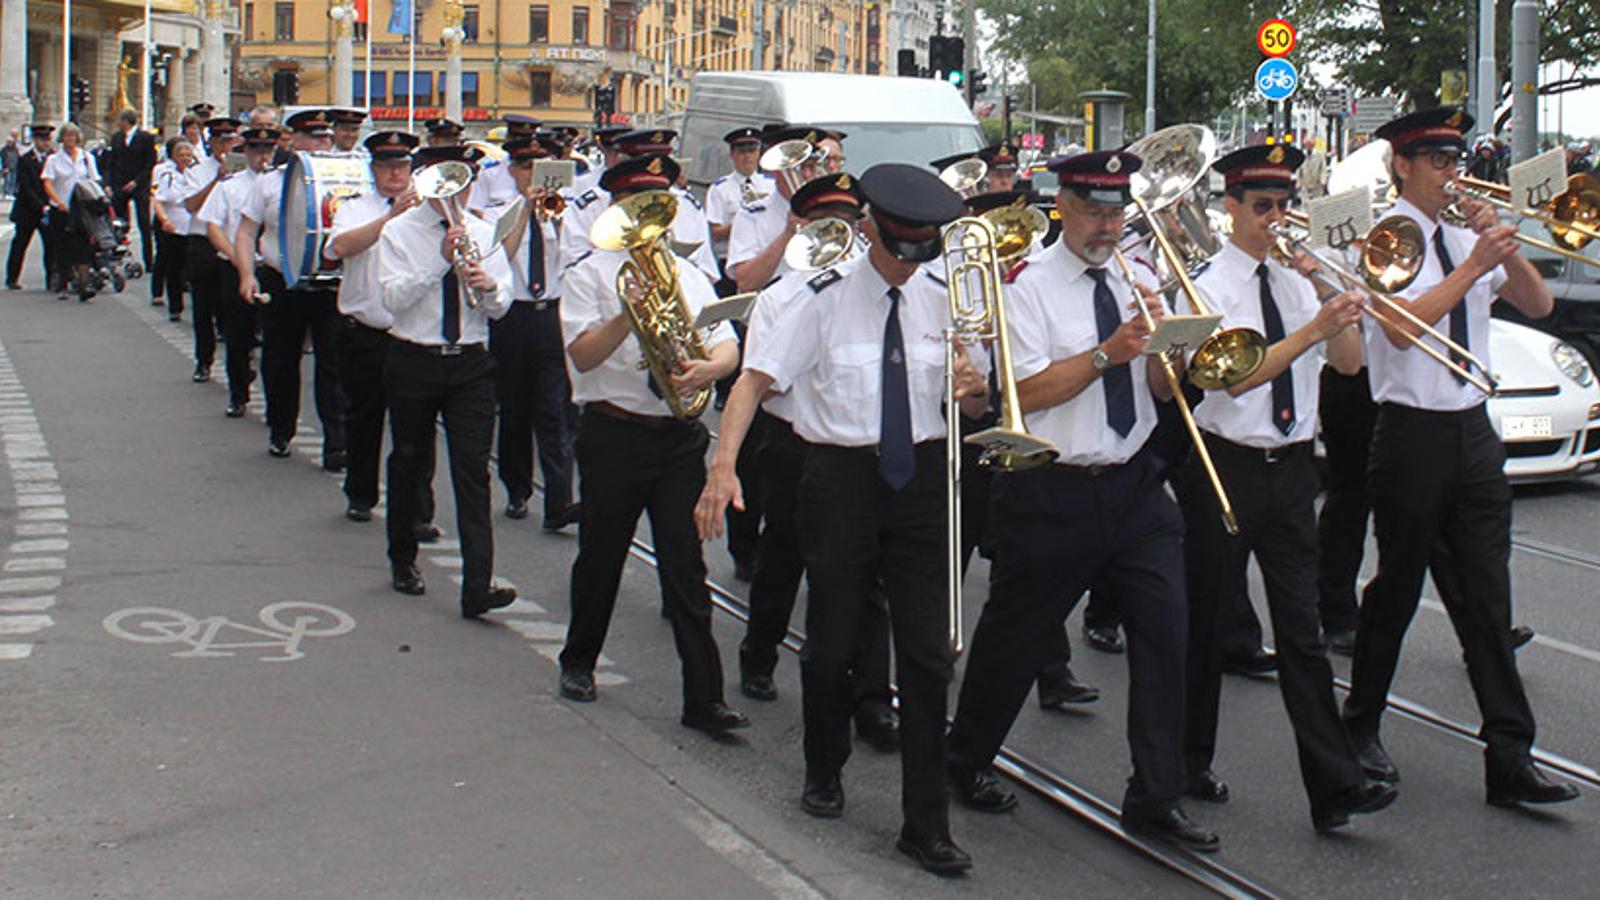 Musikkåren marscherar på Stockholms gator. De spelar på olika typer av instrument.